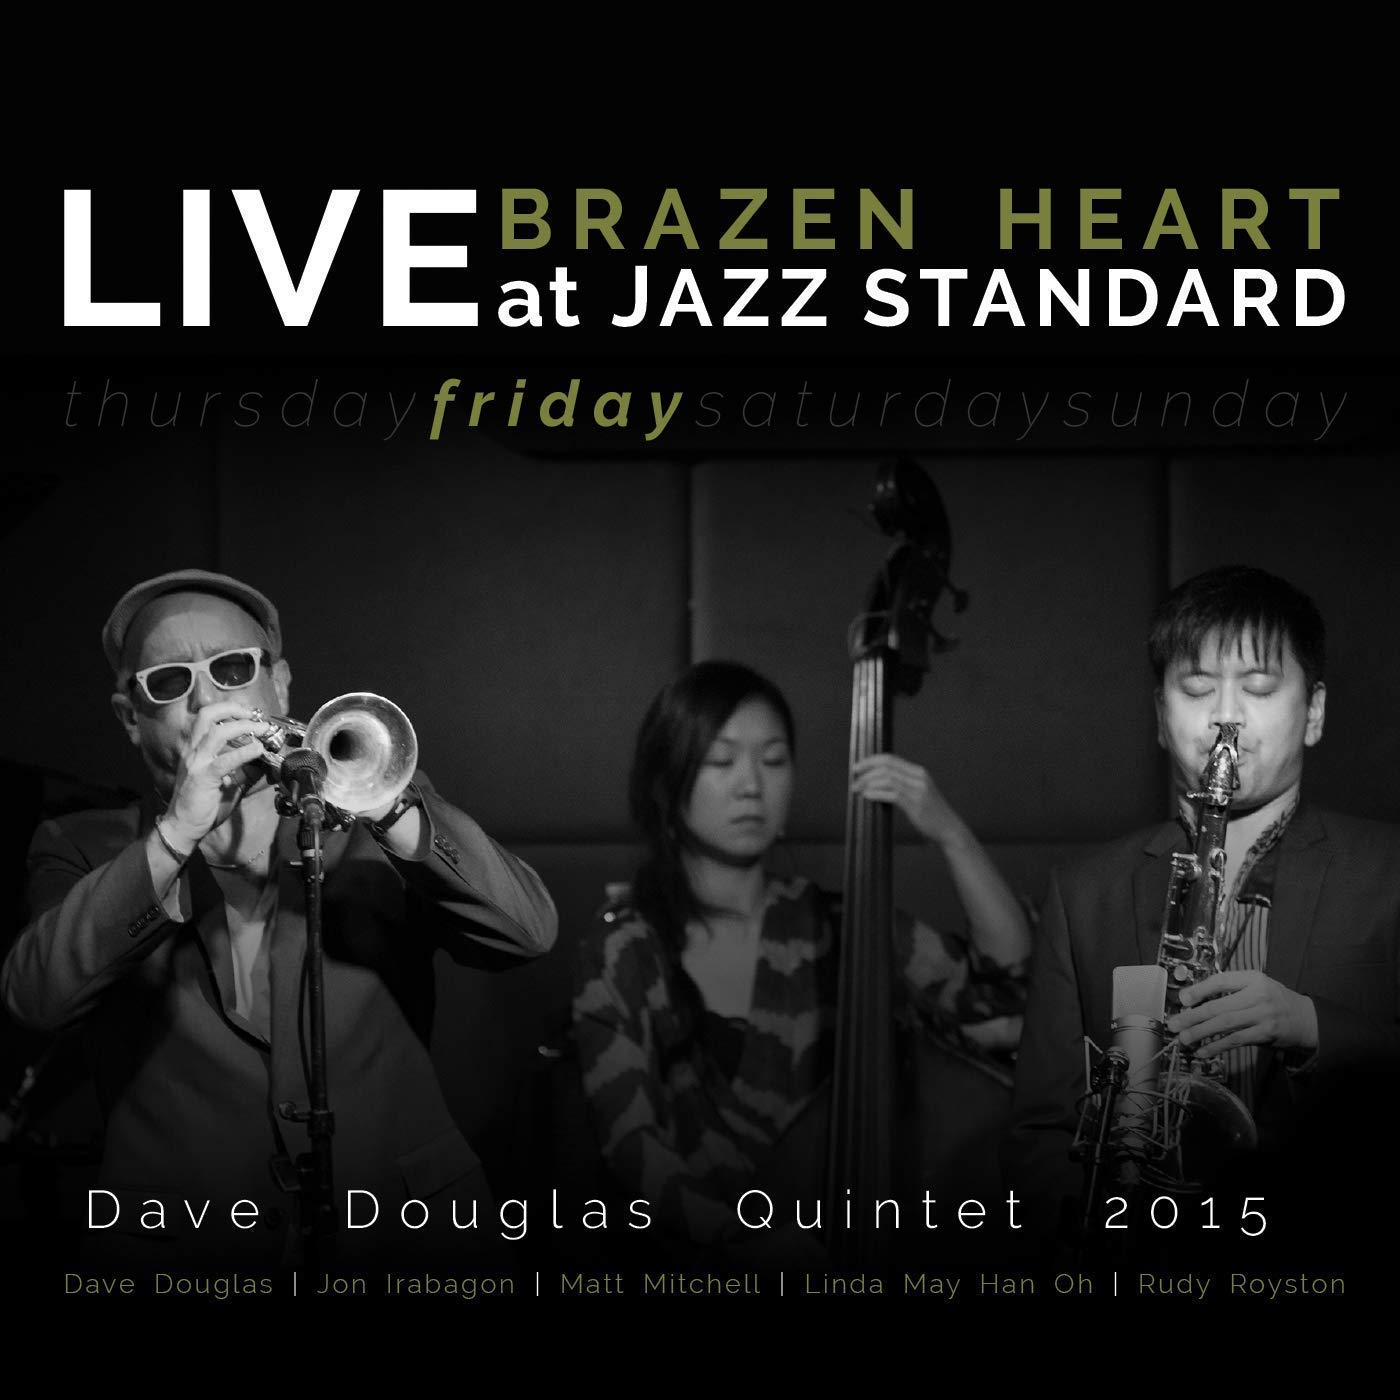 DAVE DOUGLAS - Brazen Heart Live at Jazz Standard - Friday cover 